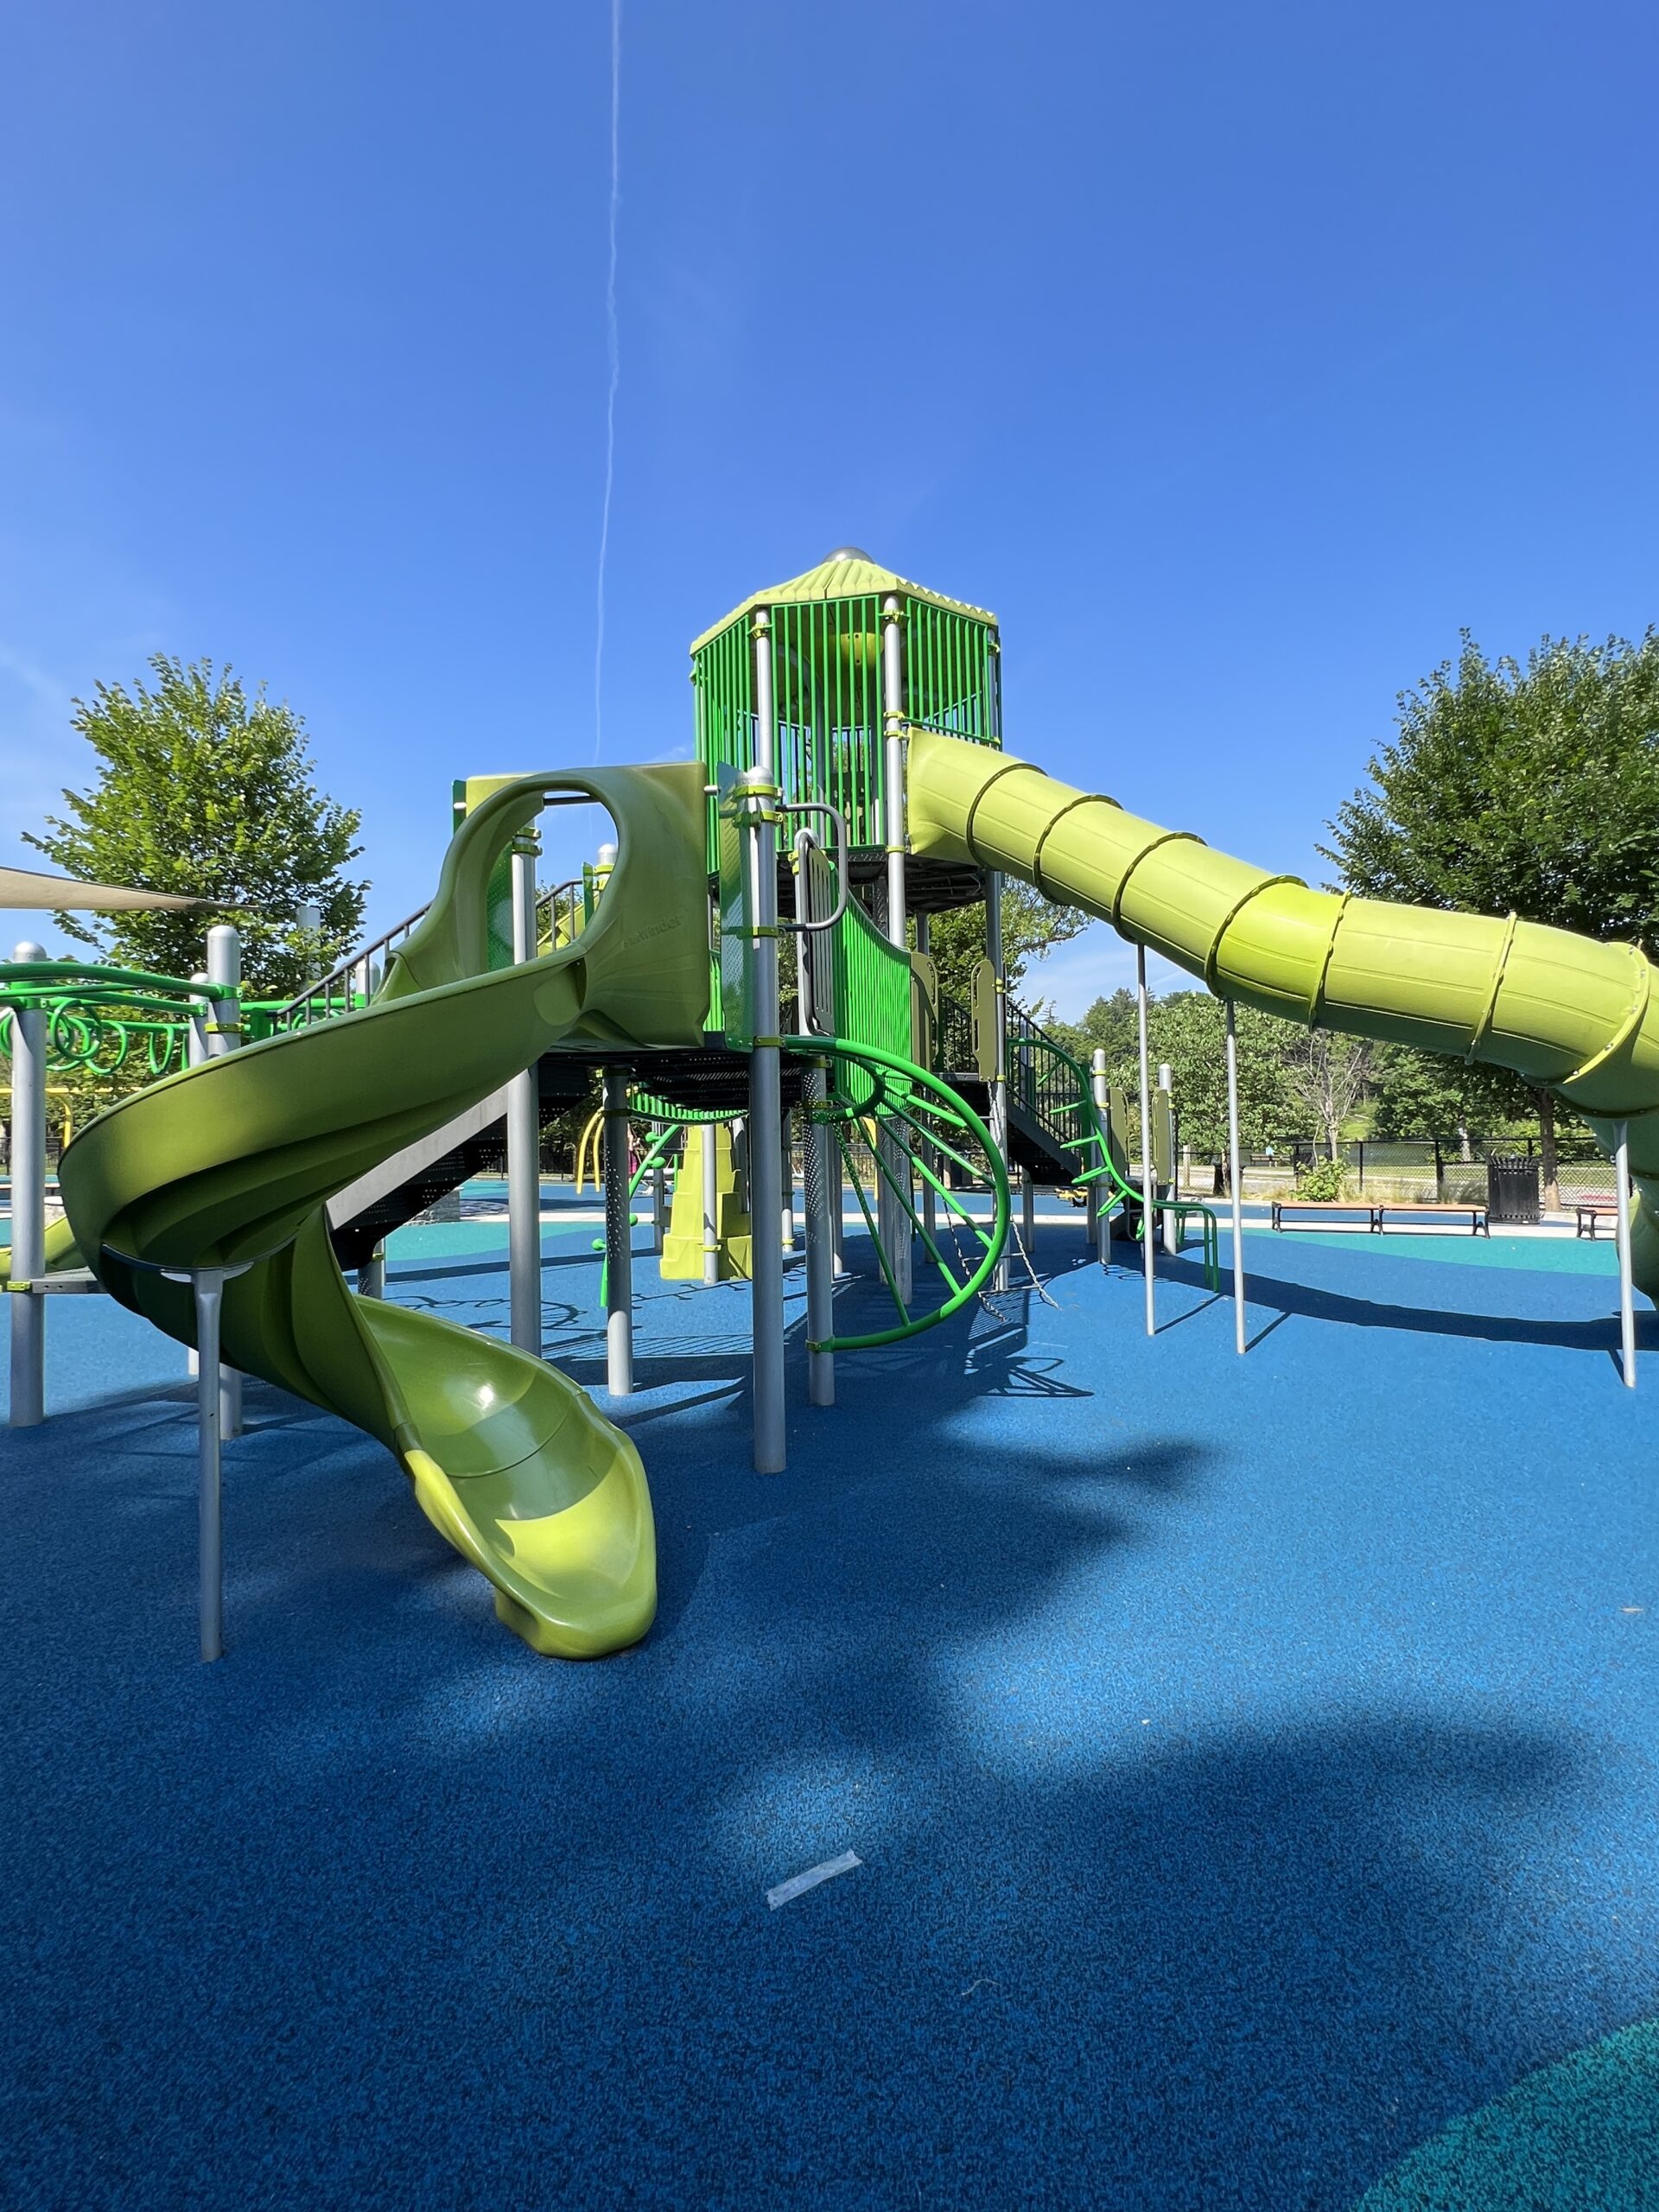 Verona Park Playground in Verona NJ - SLIDES - open twisting green slide TALL image